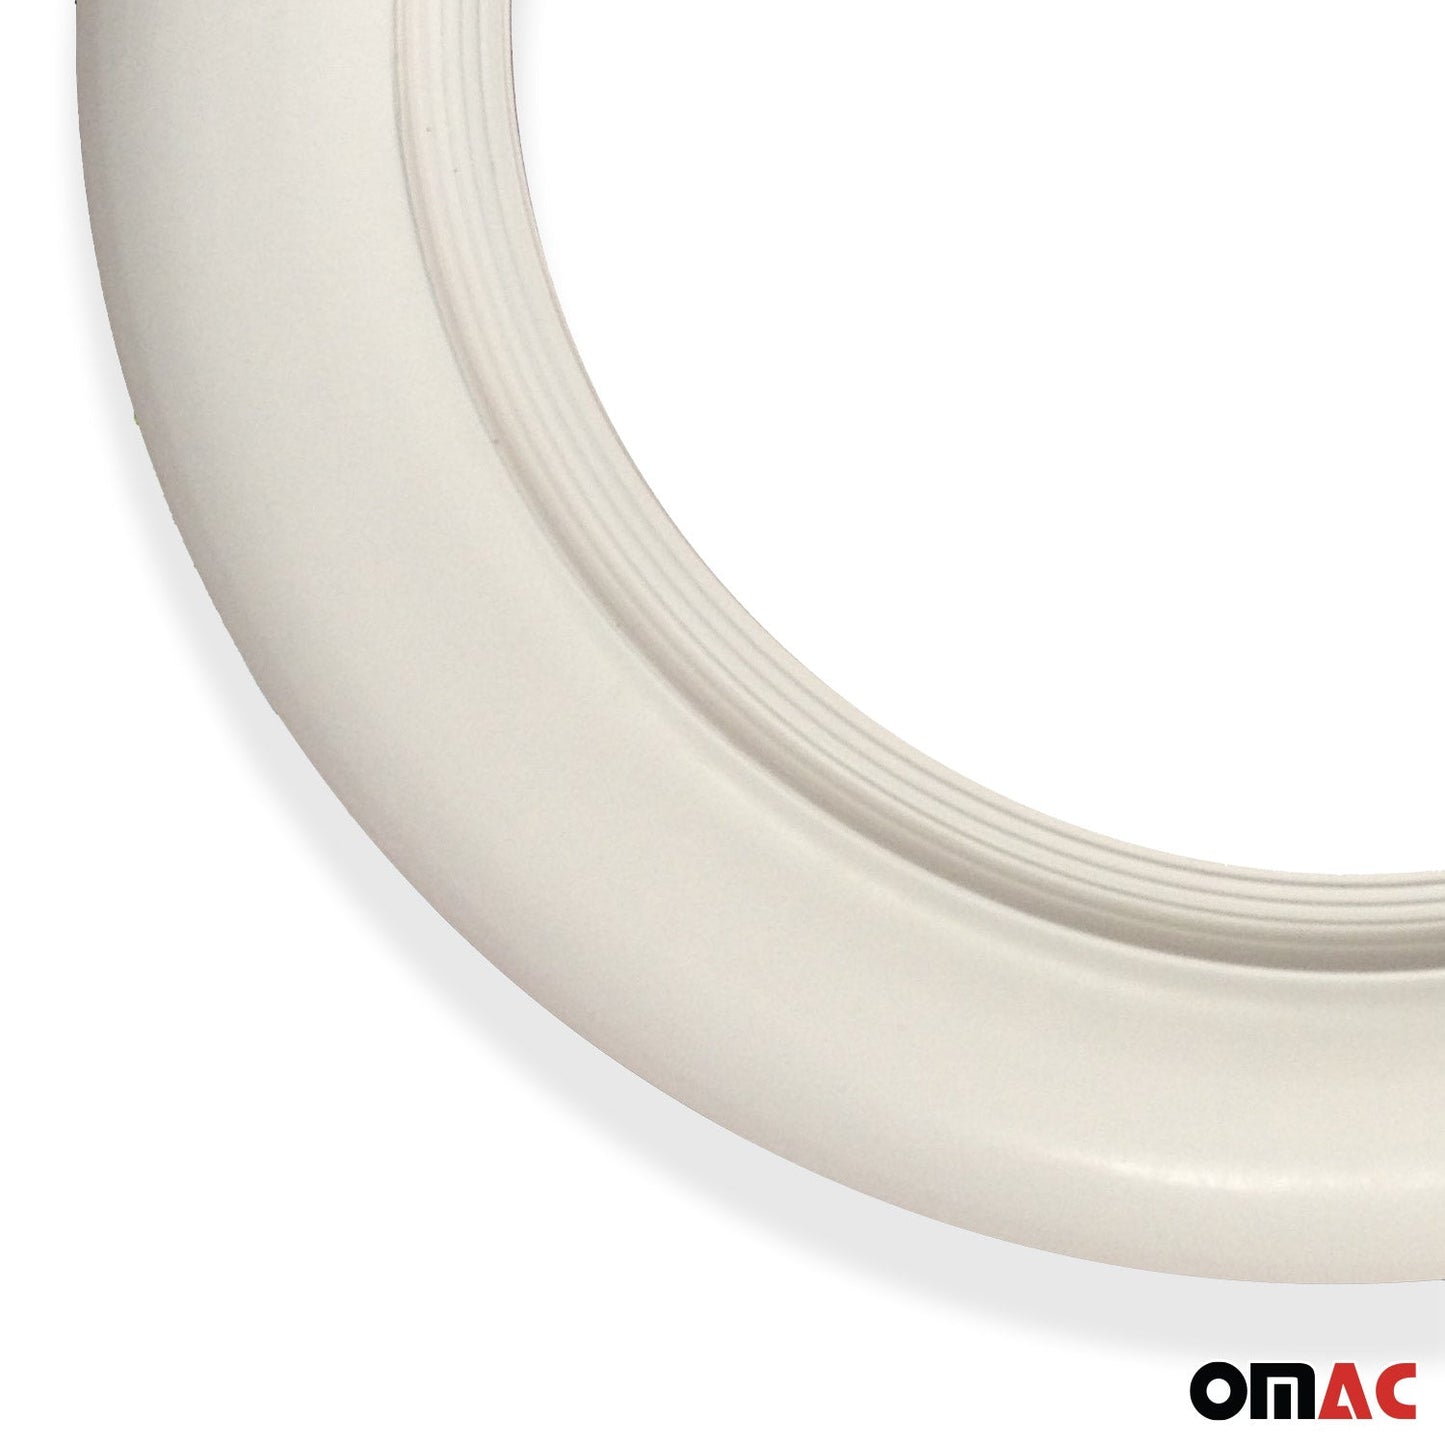 OMAC White Wall Tire Insert 15" Band Portawall Rims Sidewall Rubber Ring Set 4 Pcs 96TW015WW